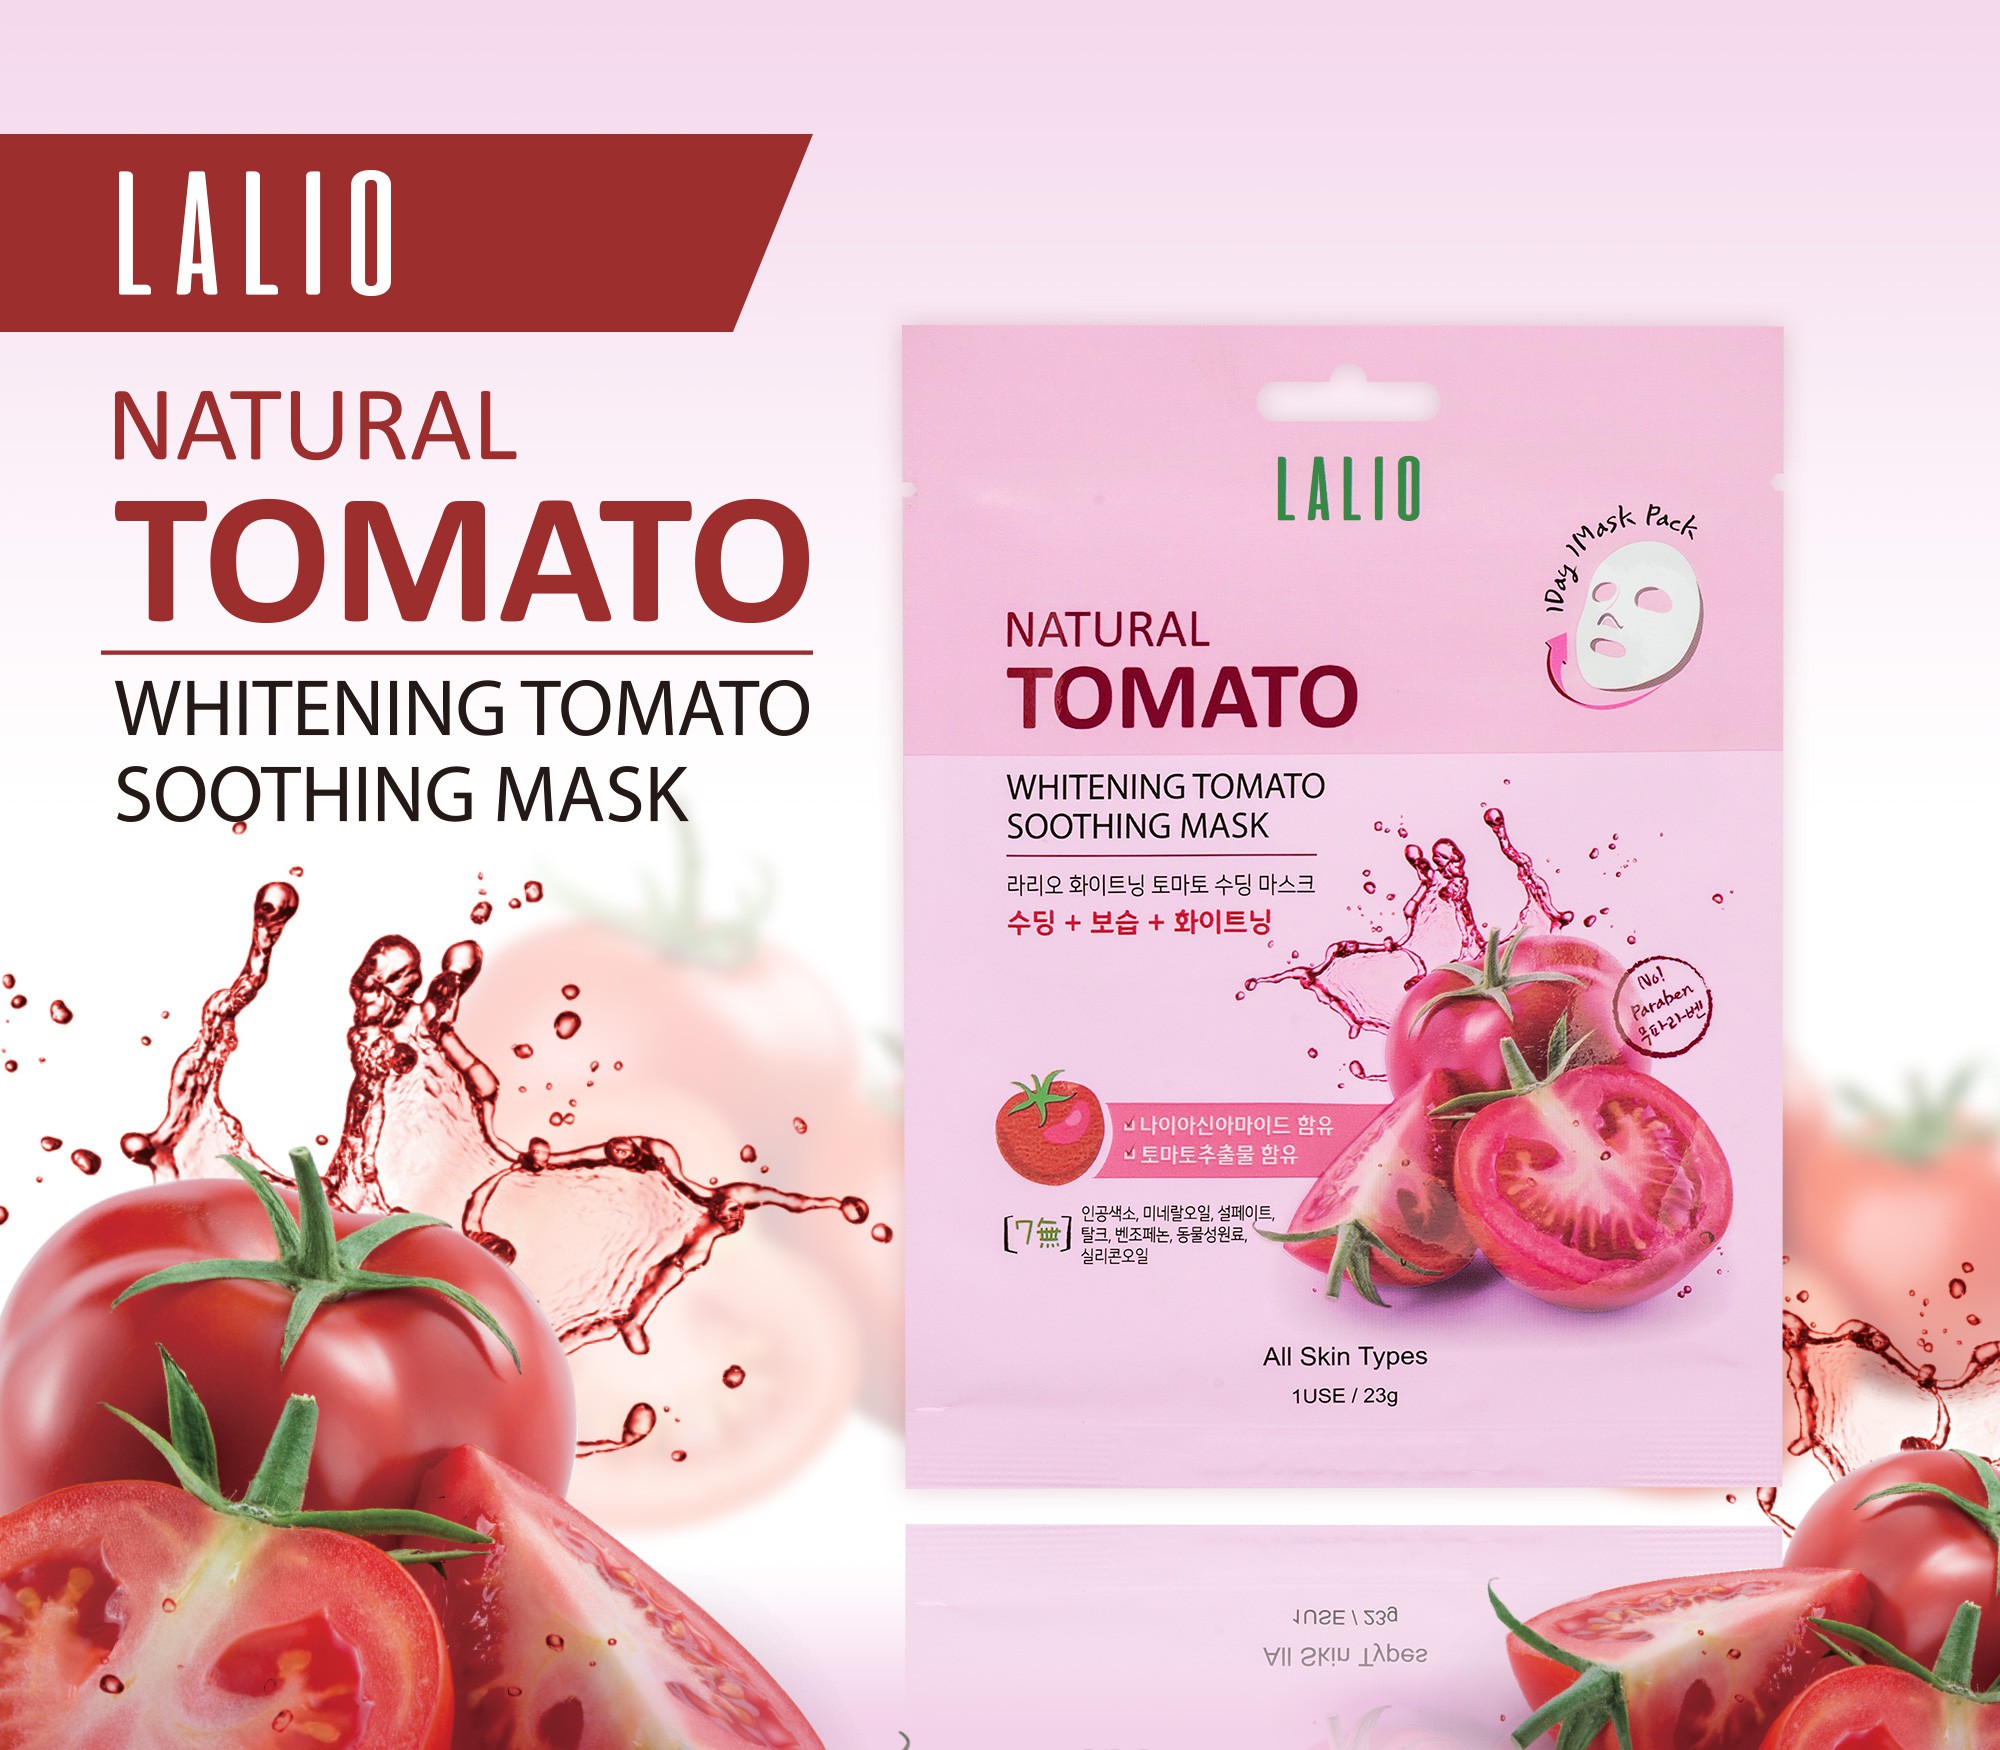 Lalio,  Lalio Whitening Tomato Soothing Mask, Whitening Tomato Soothing Mask, Lalio Whitening Tomato Soothing Mask 23g